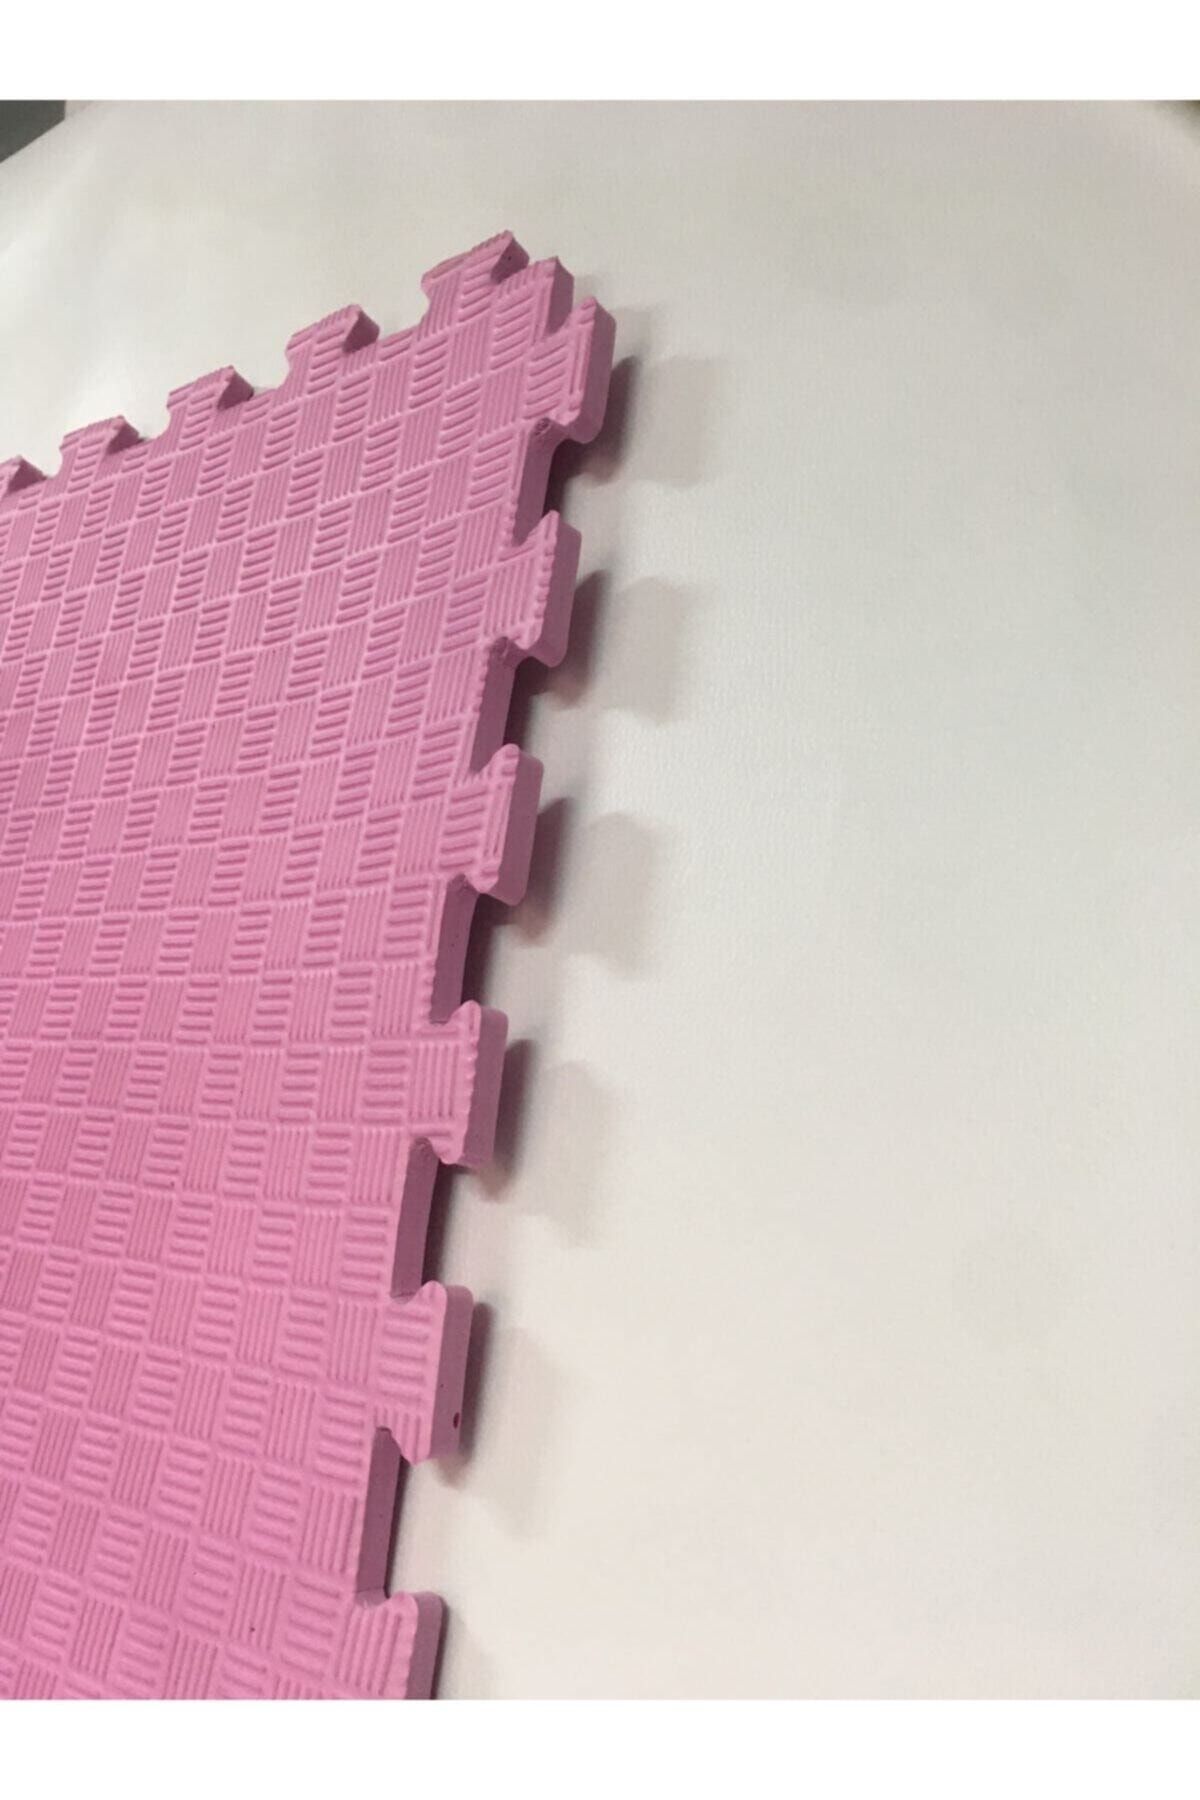 GES MEDİKAL 100x100 Dimensions 1.3 Mm Thickness Tatami Floor Mat